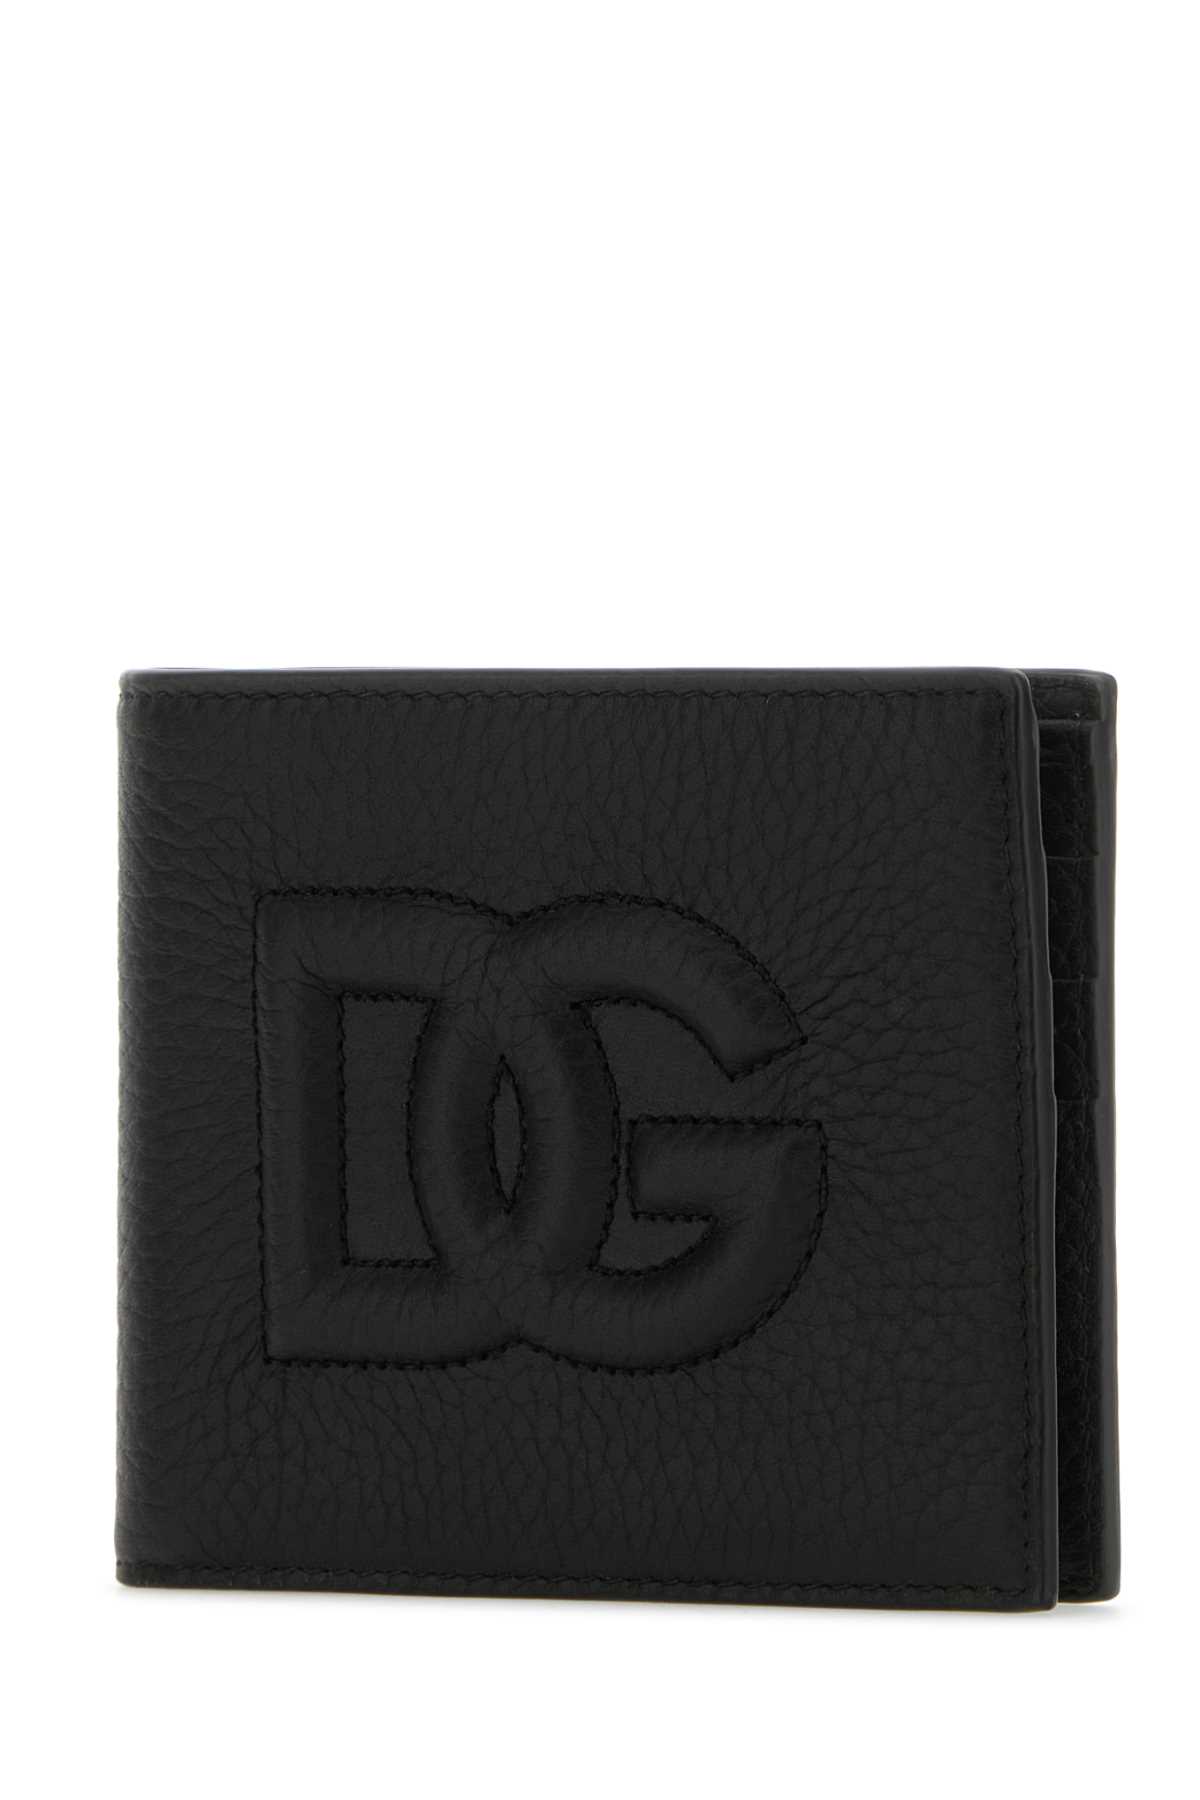 Dolce & Gabbana Black Leather Wallet In Nero